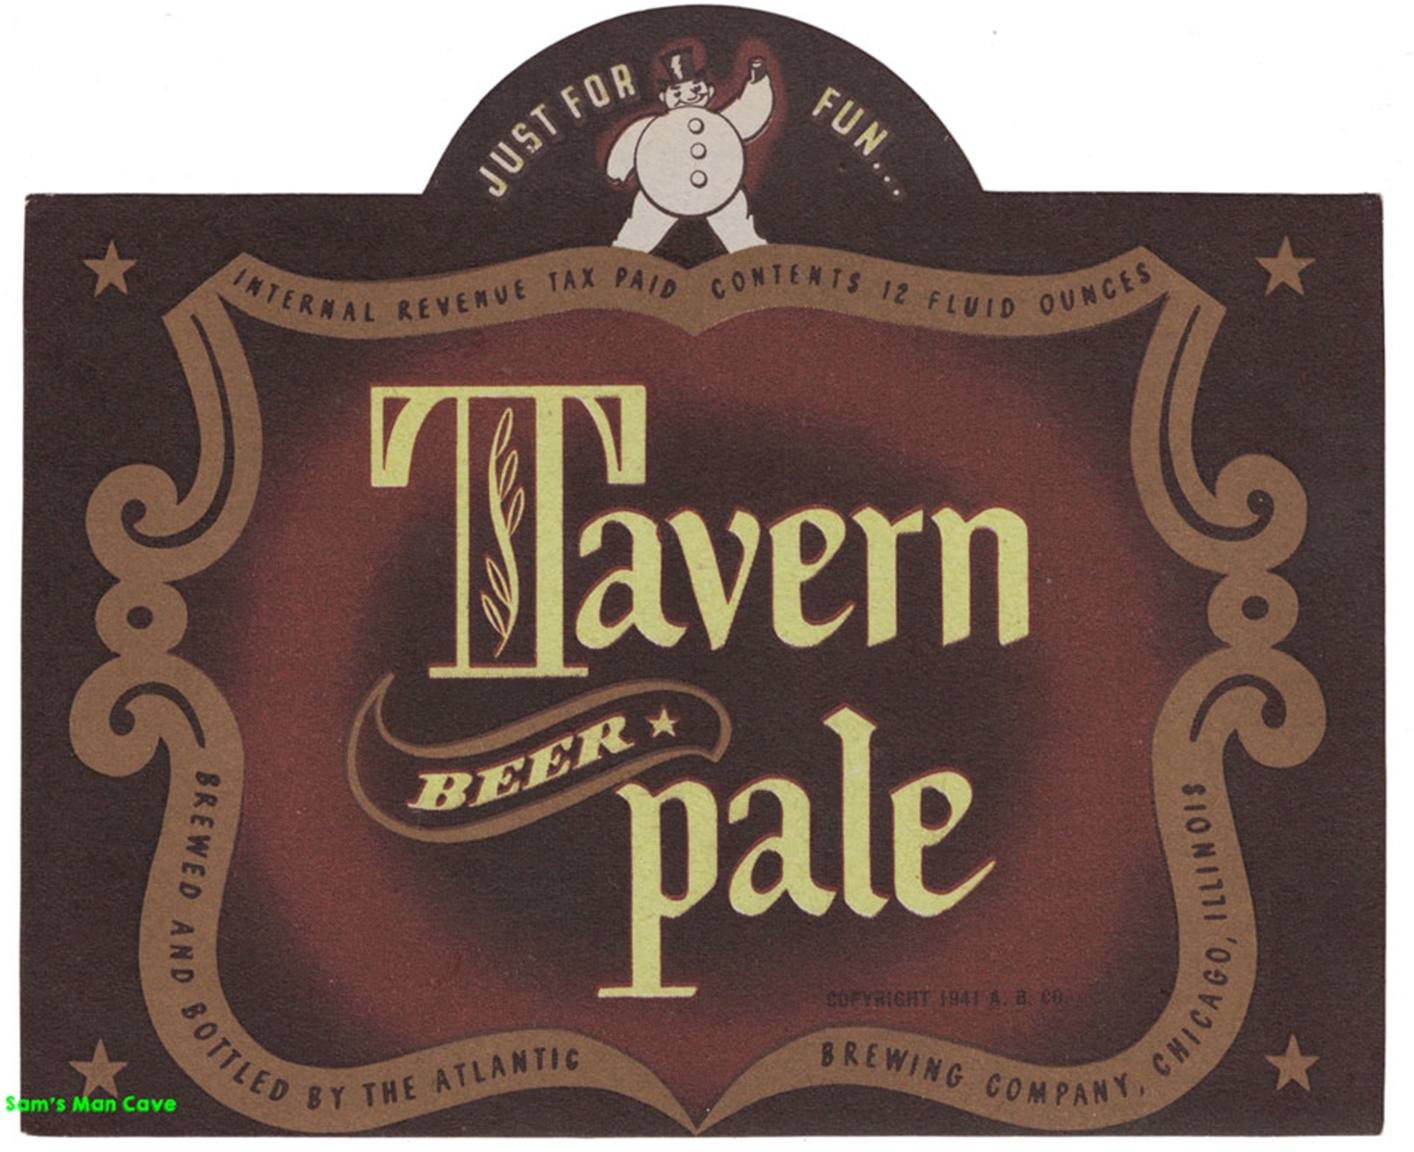 Tavern Pale Beer IRTP Label